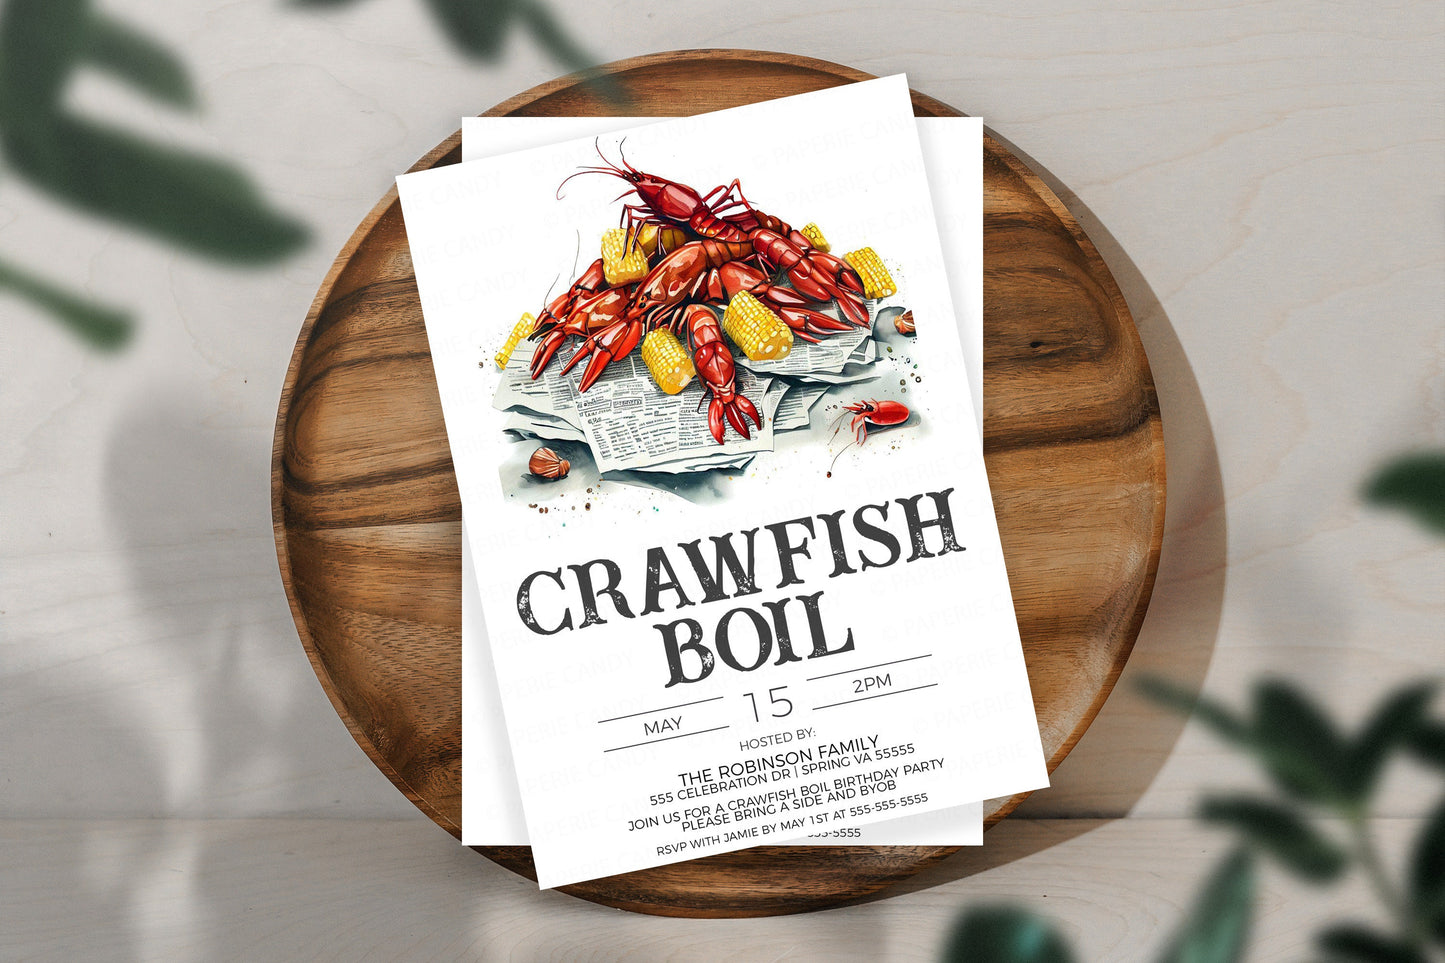 Crawfish Boil Invitation, Crawfish Boil Invite, Crawfish Boil Birthday, Crawfish Graduation Party, Beer And Boil Editable Printable Template